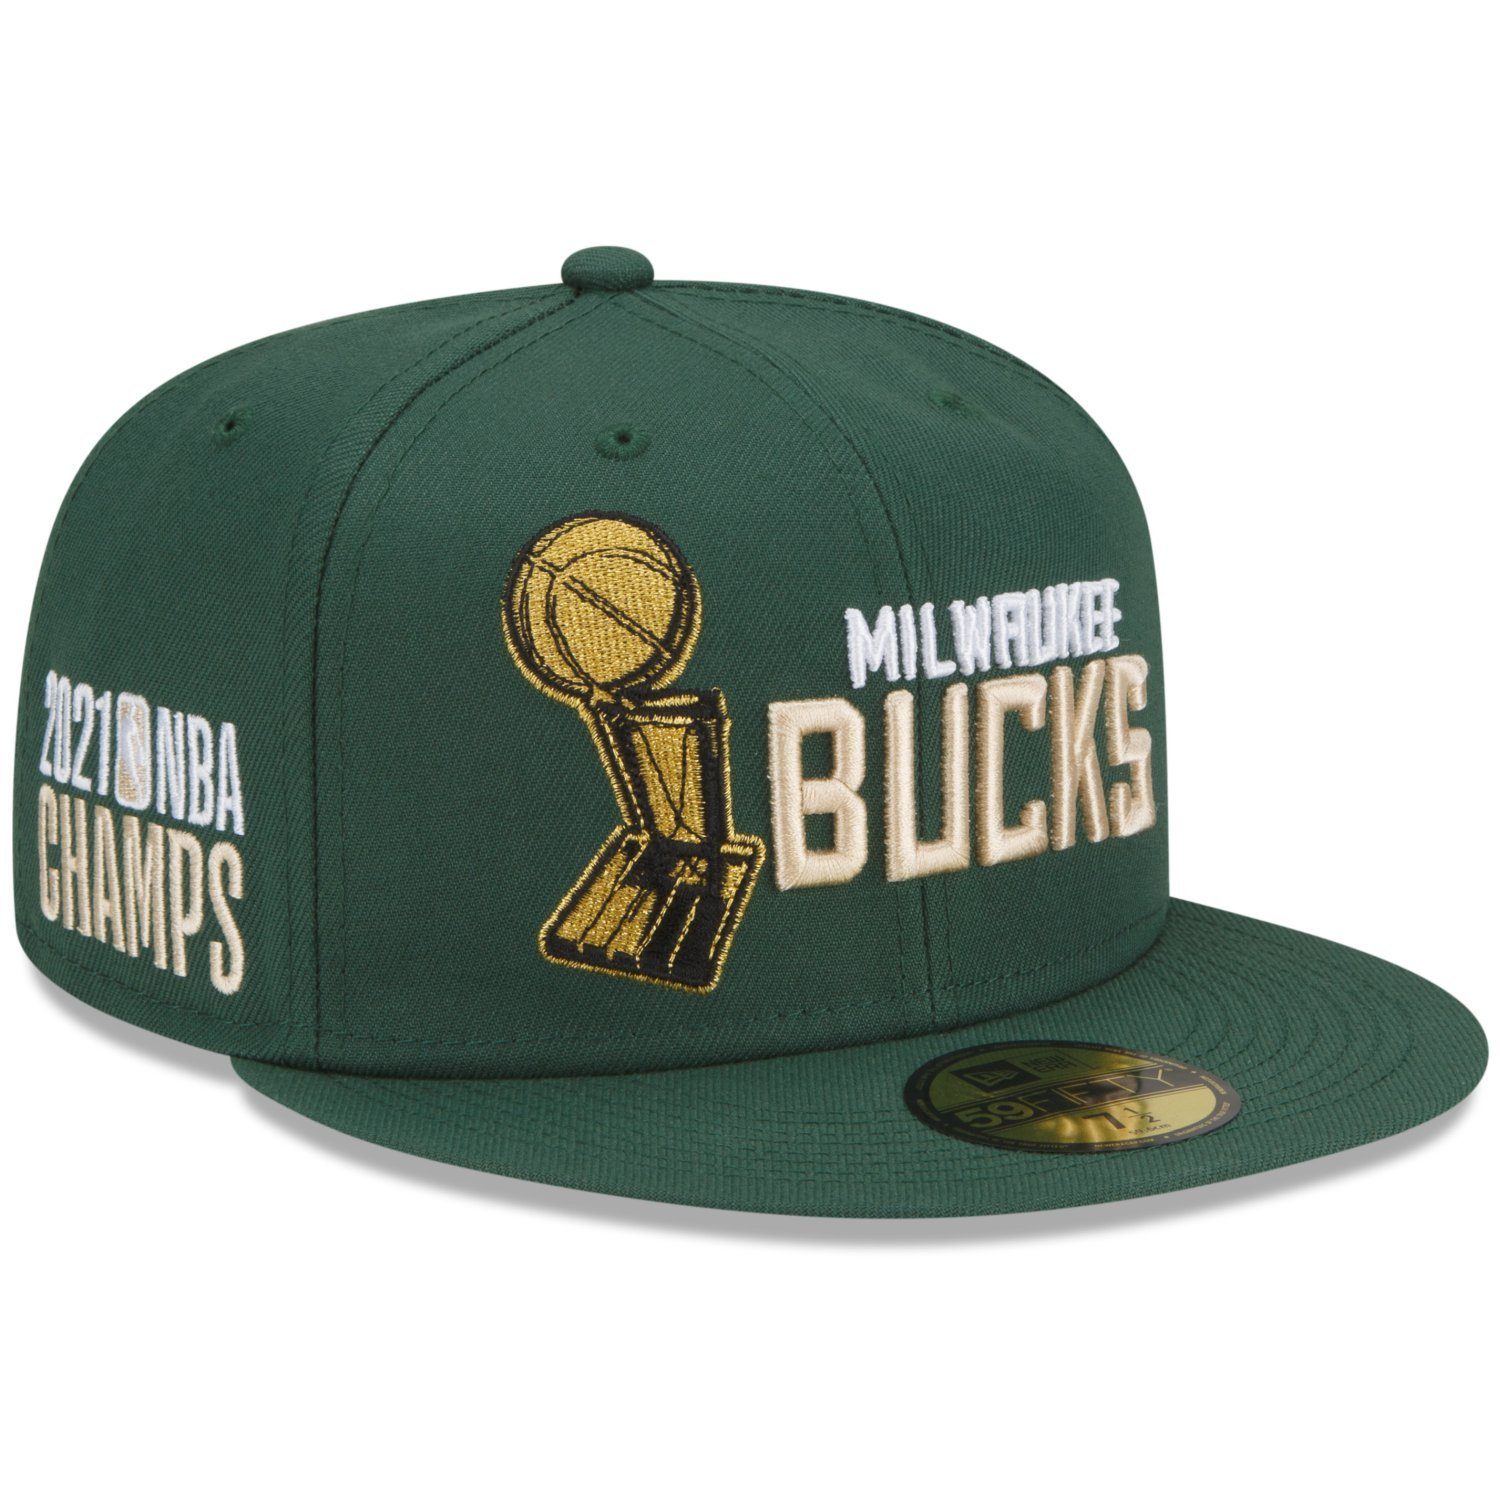 New Era Fitted Cap 59Fifty NBA CHAMPIONS Milwaukee Bucks grün